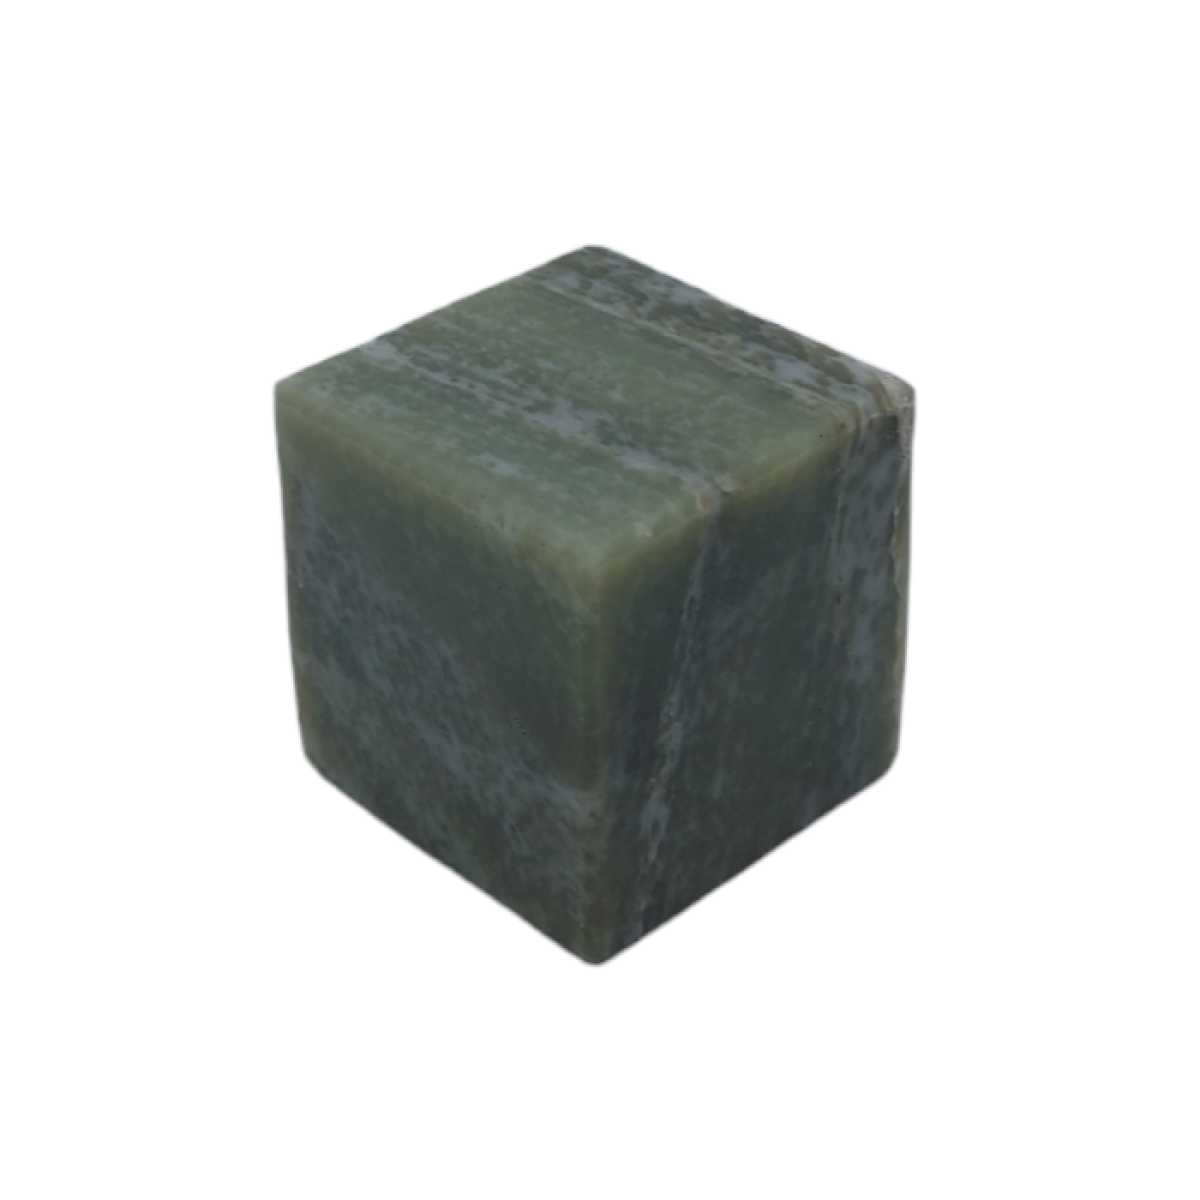 cubo-würfel-cube-giada-nefrite-jade-nephrite9